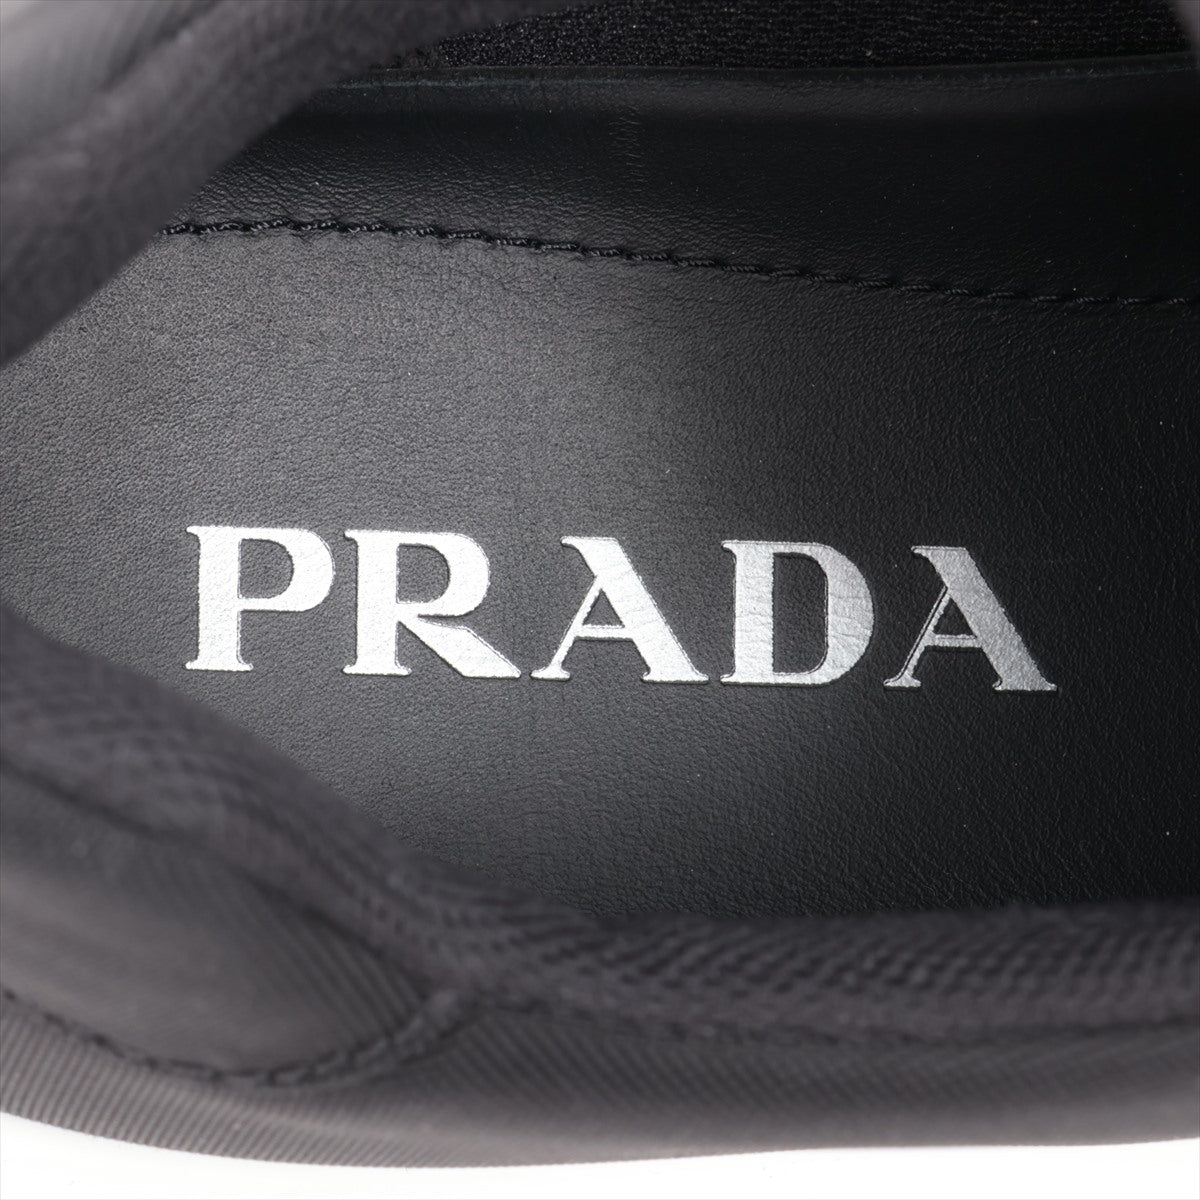 Prada Leather X Fabric Trainers 6 Men Black 4E3555